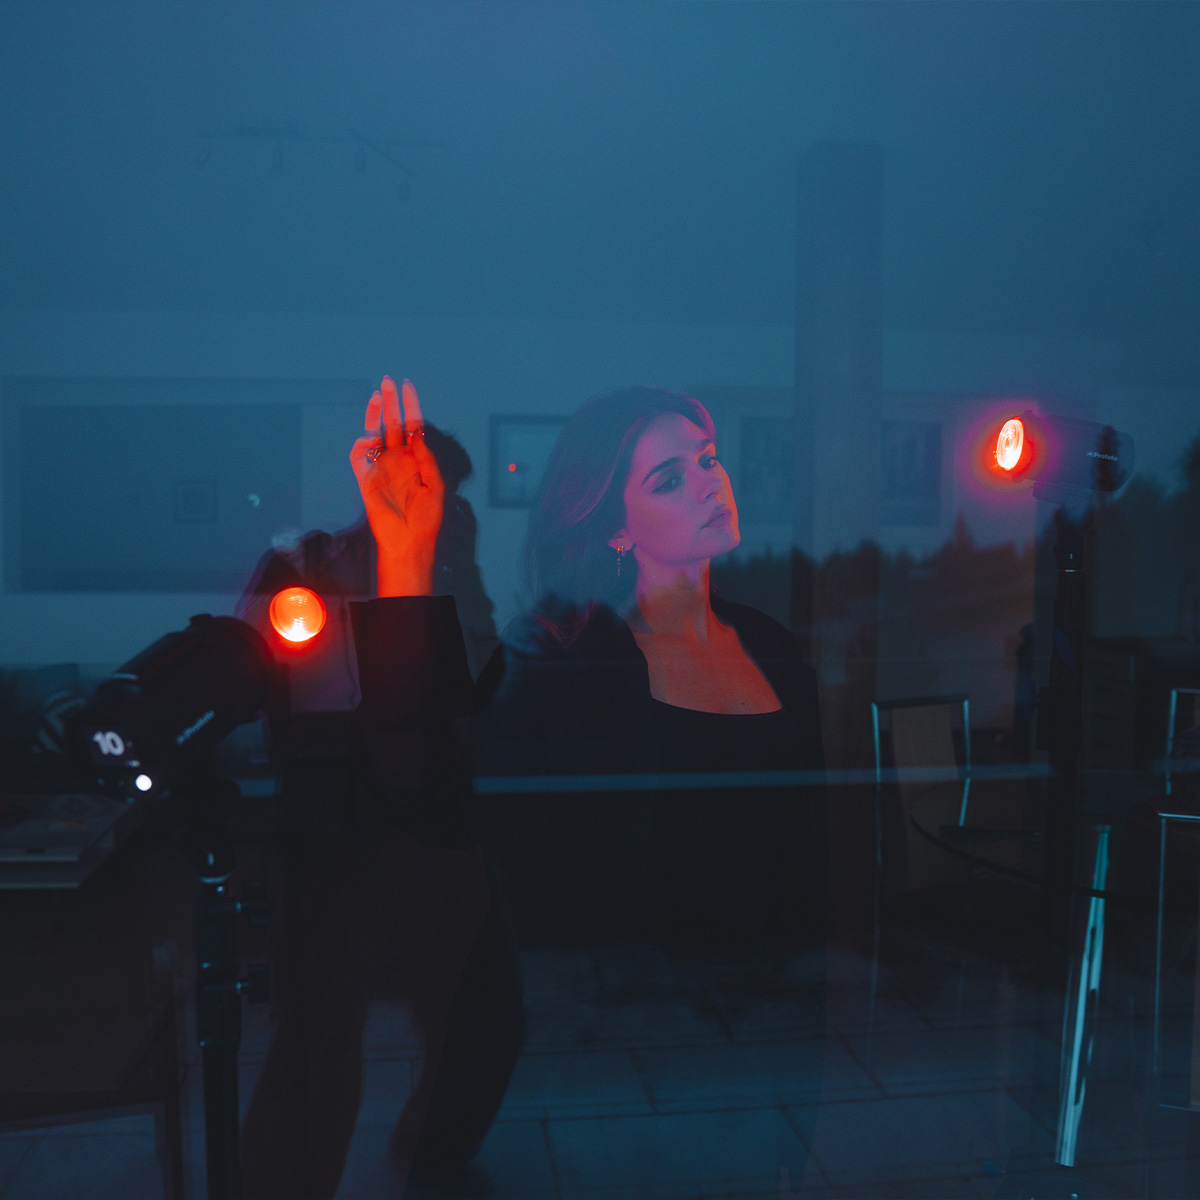 Frau hinter Fenster fotografiert in rotem Licht